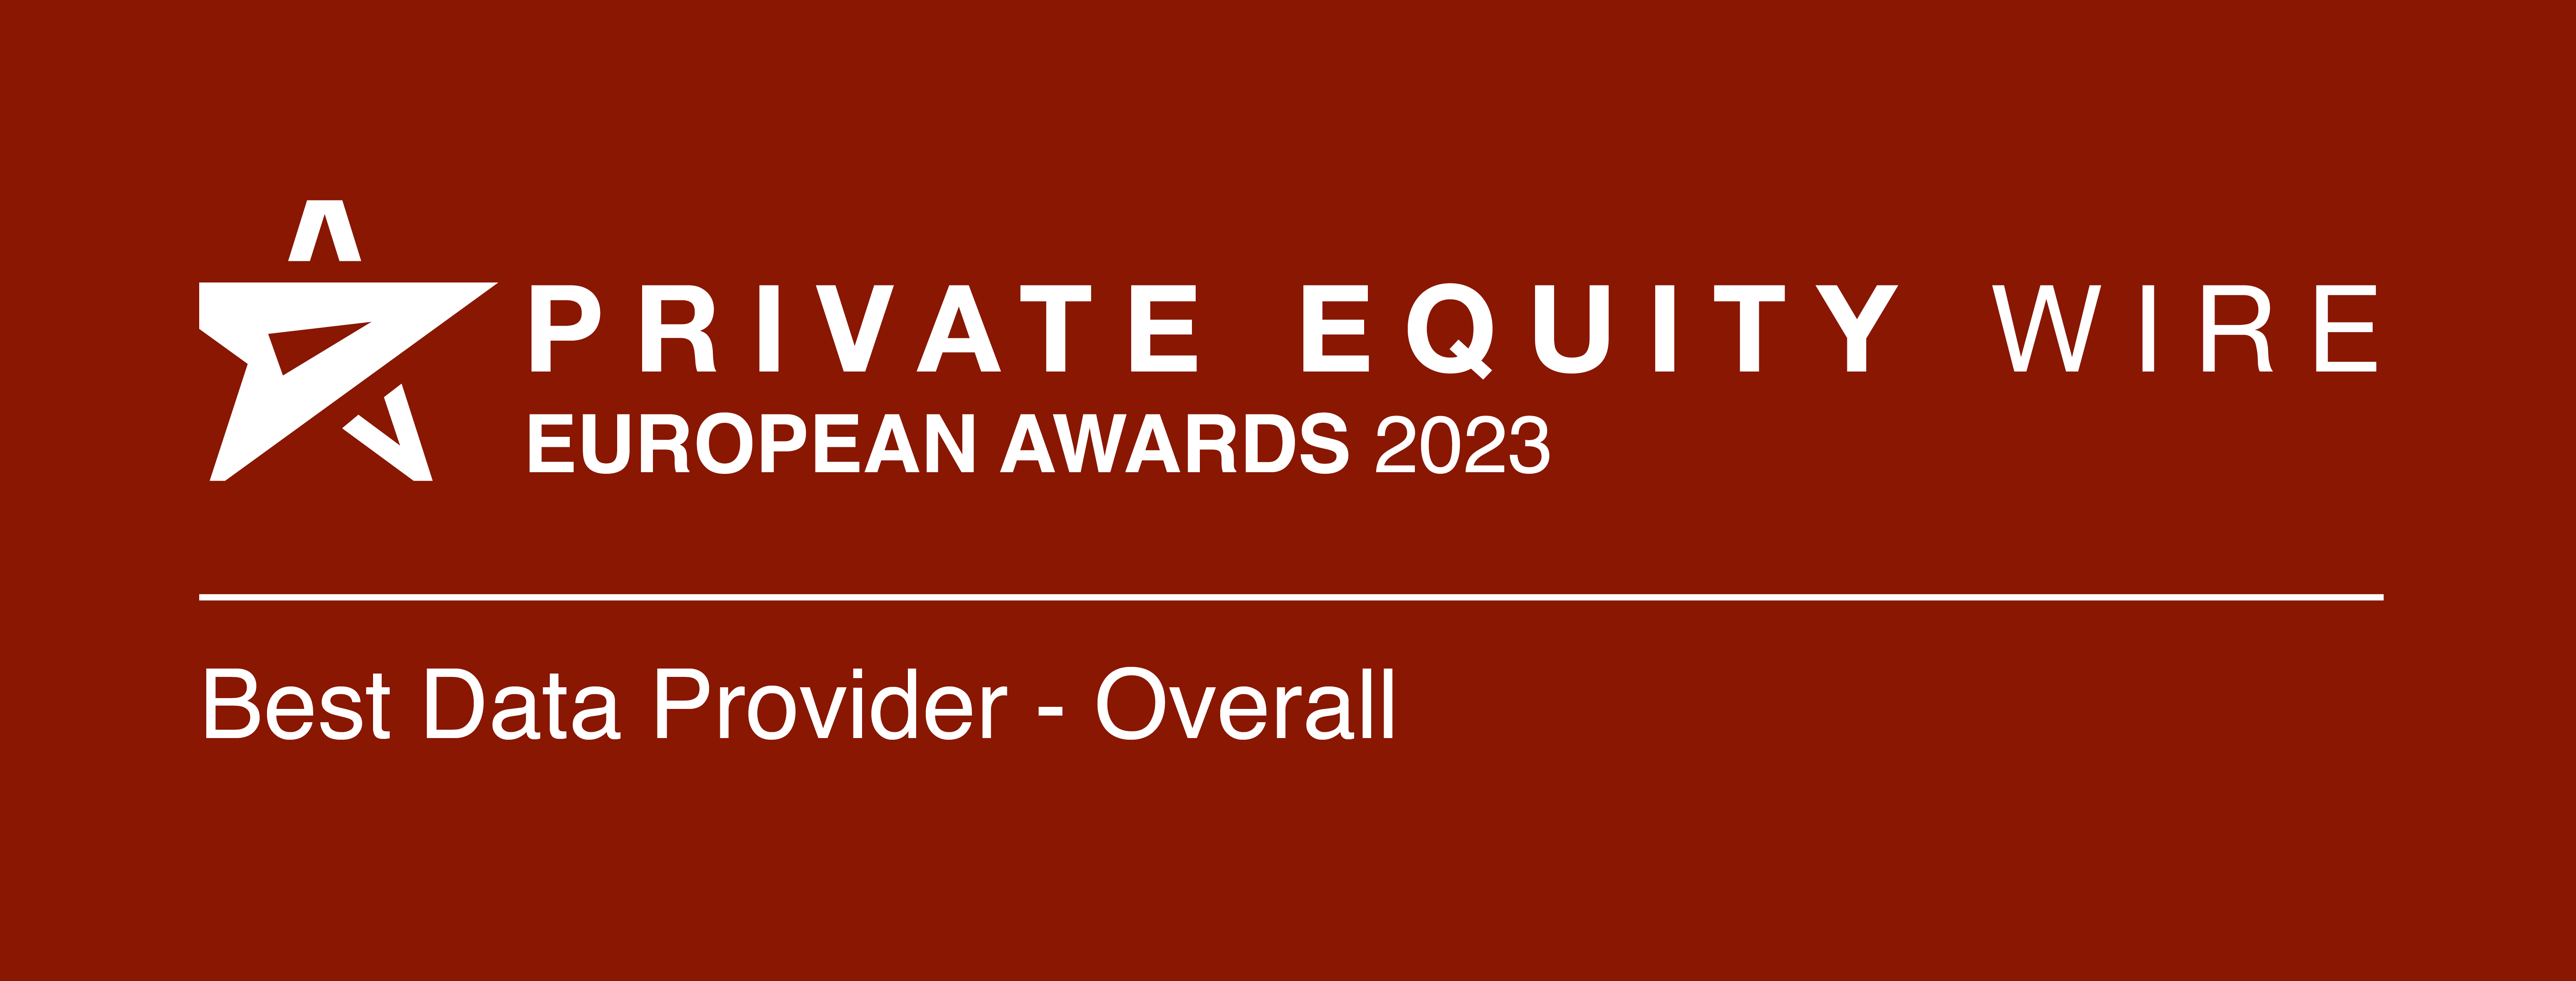 pewire-european-awards-2023.jpg